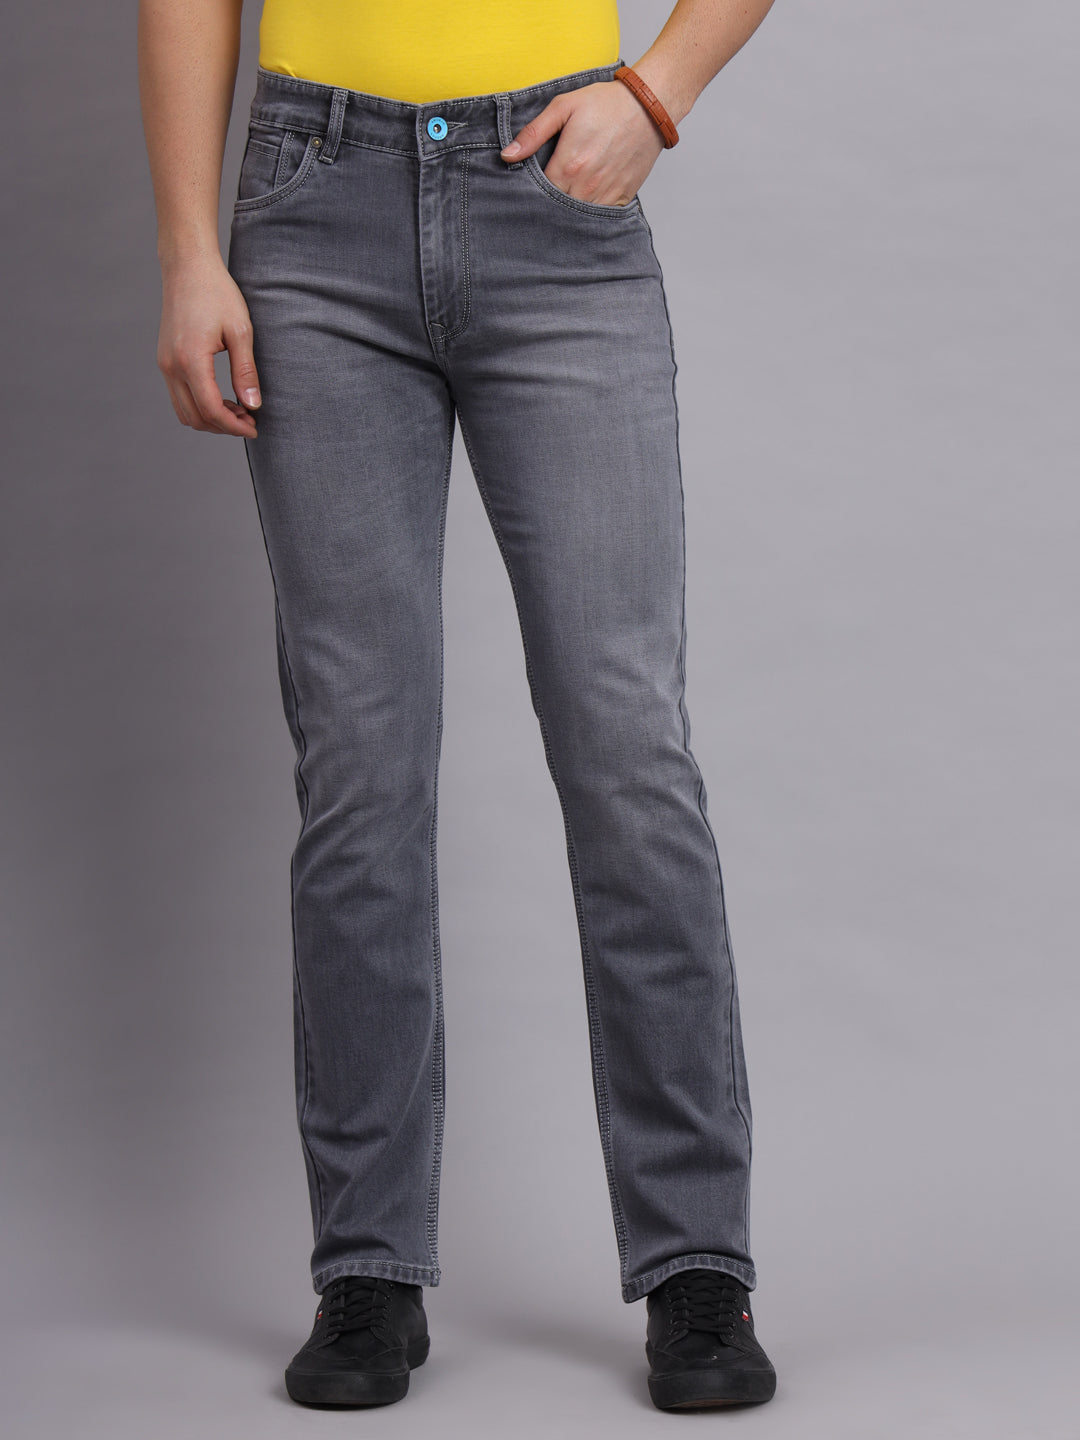 Amswan Grey Premium Jeans